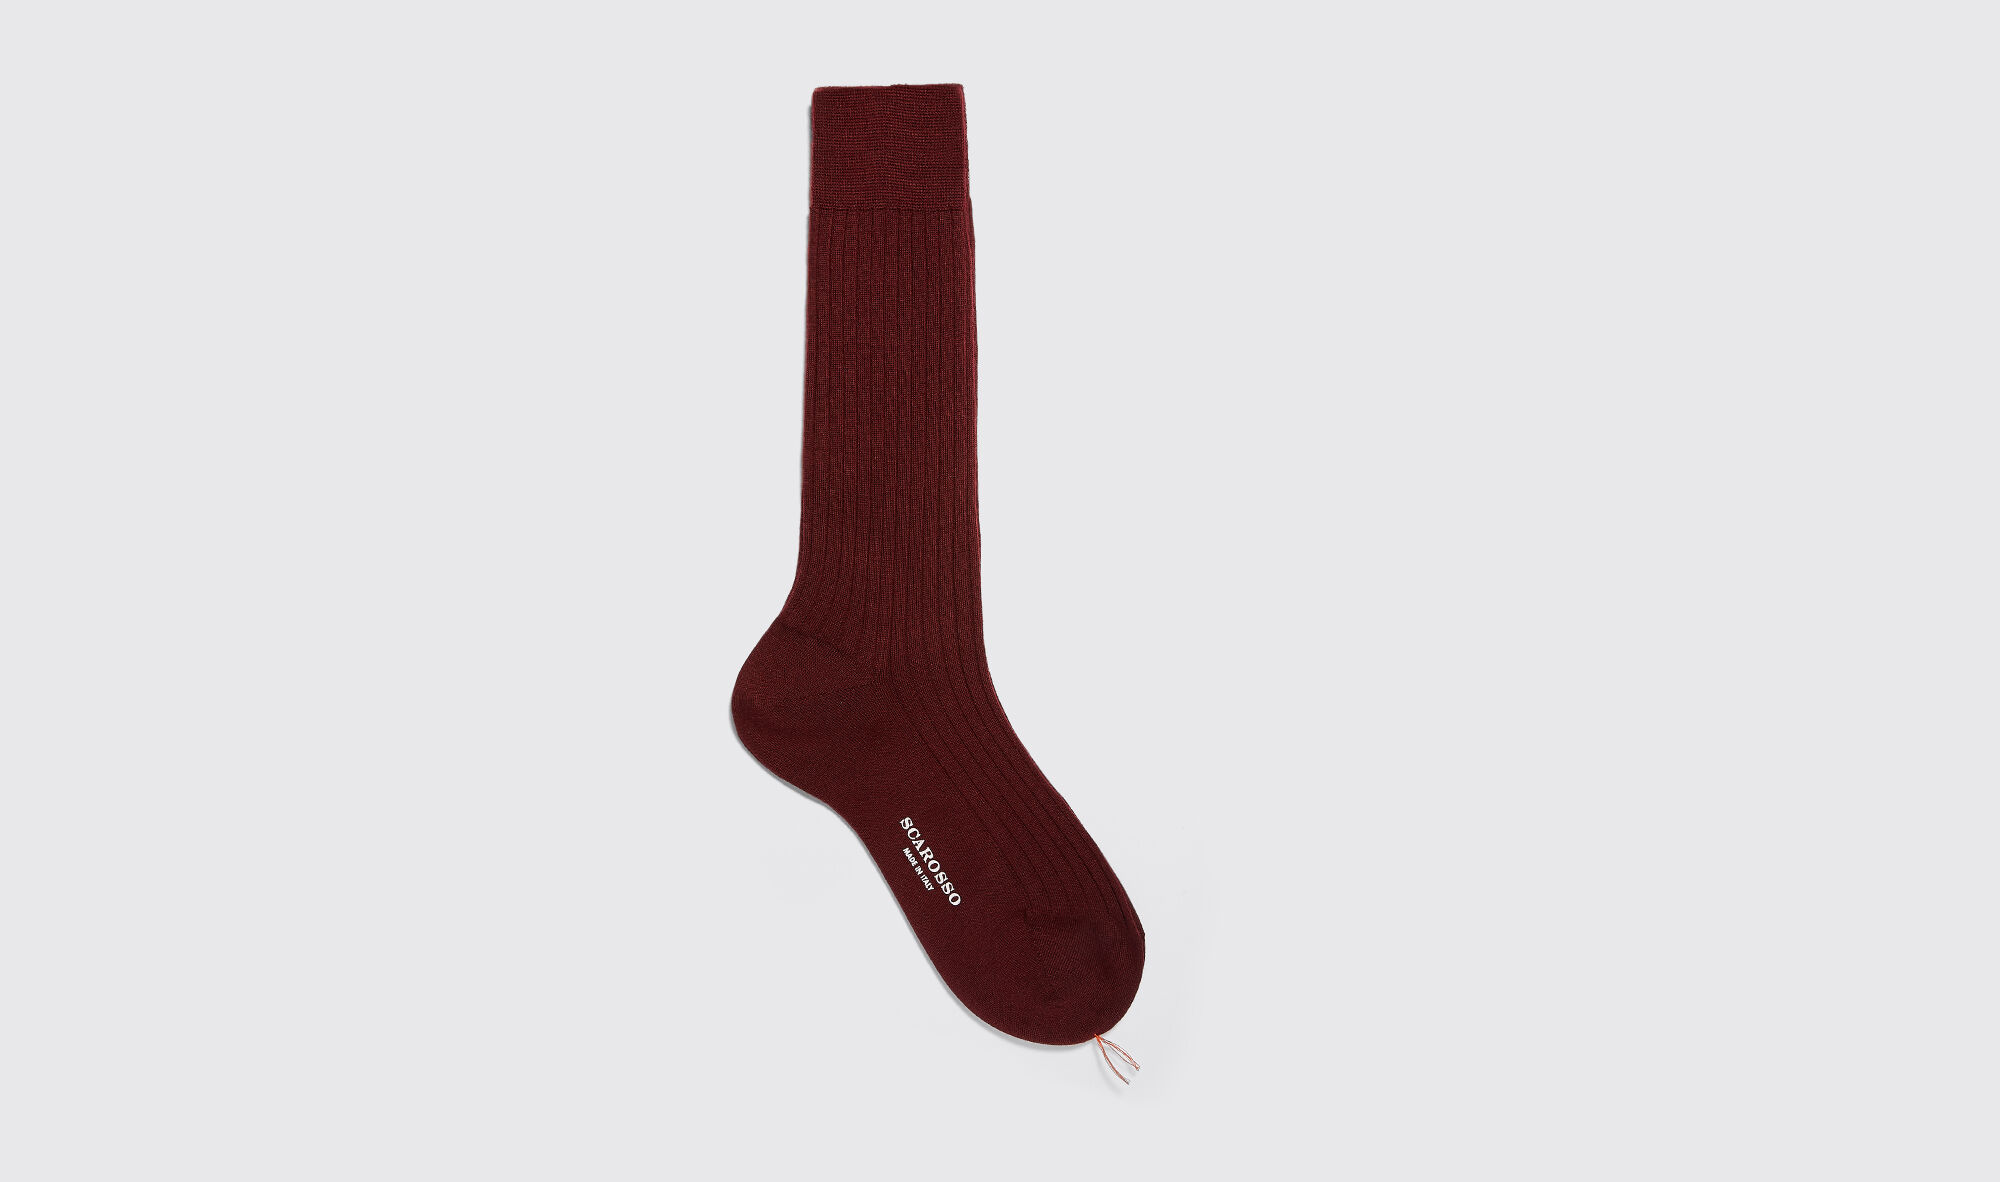 Scarosso Burgundy Wool Calf Socks - Uomo Calze Borgogna - Lana Merino 42-43